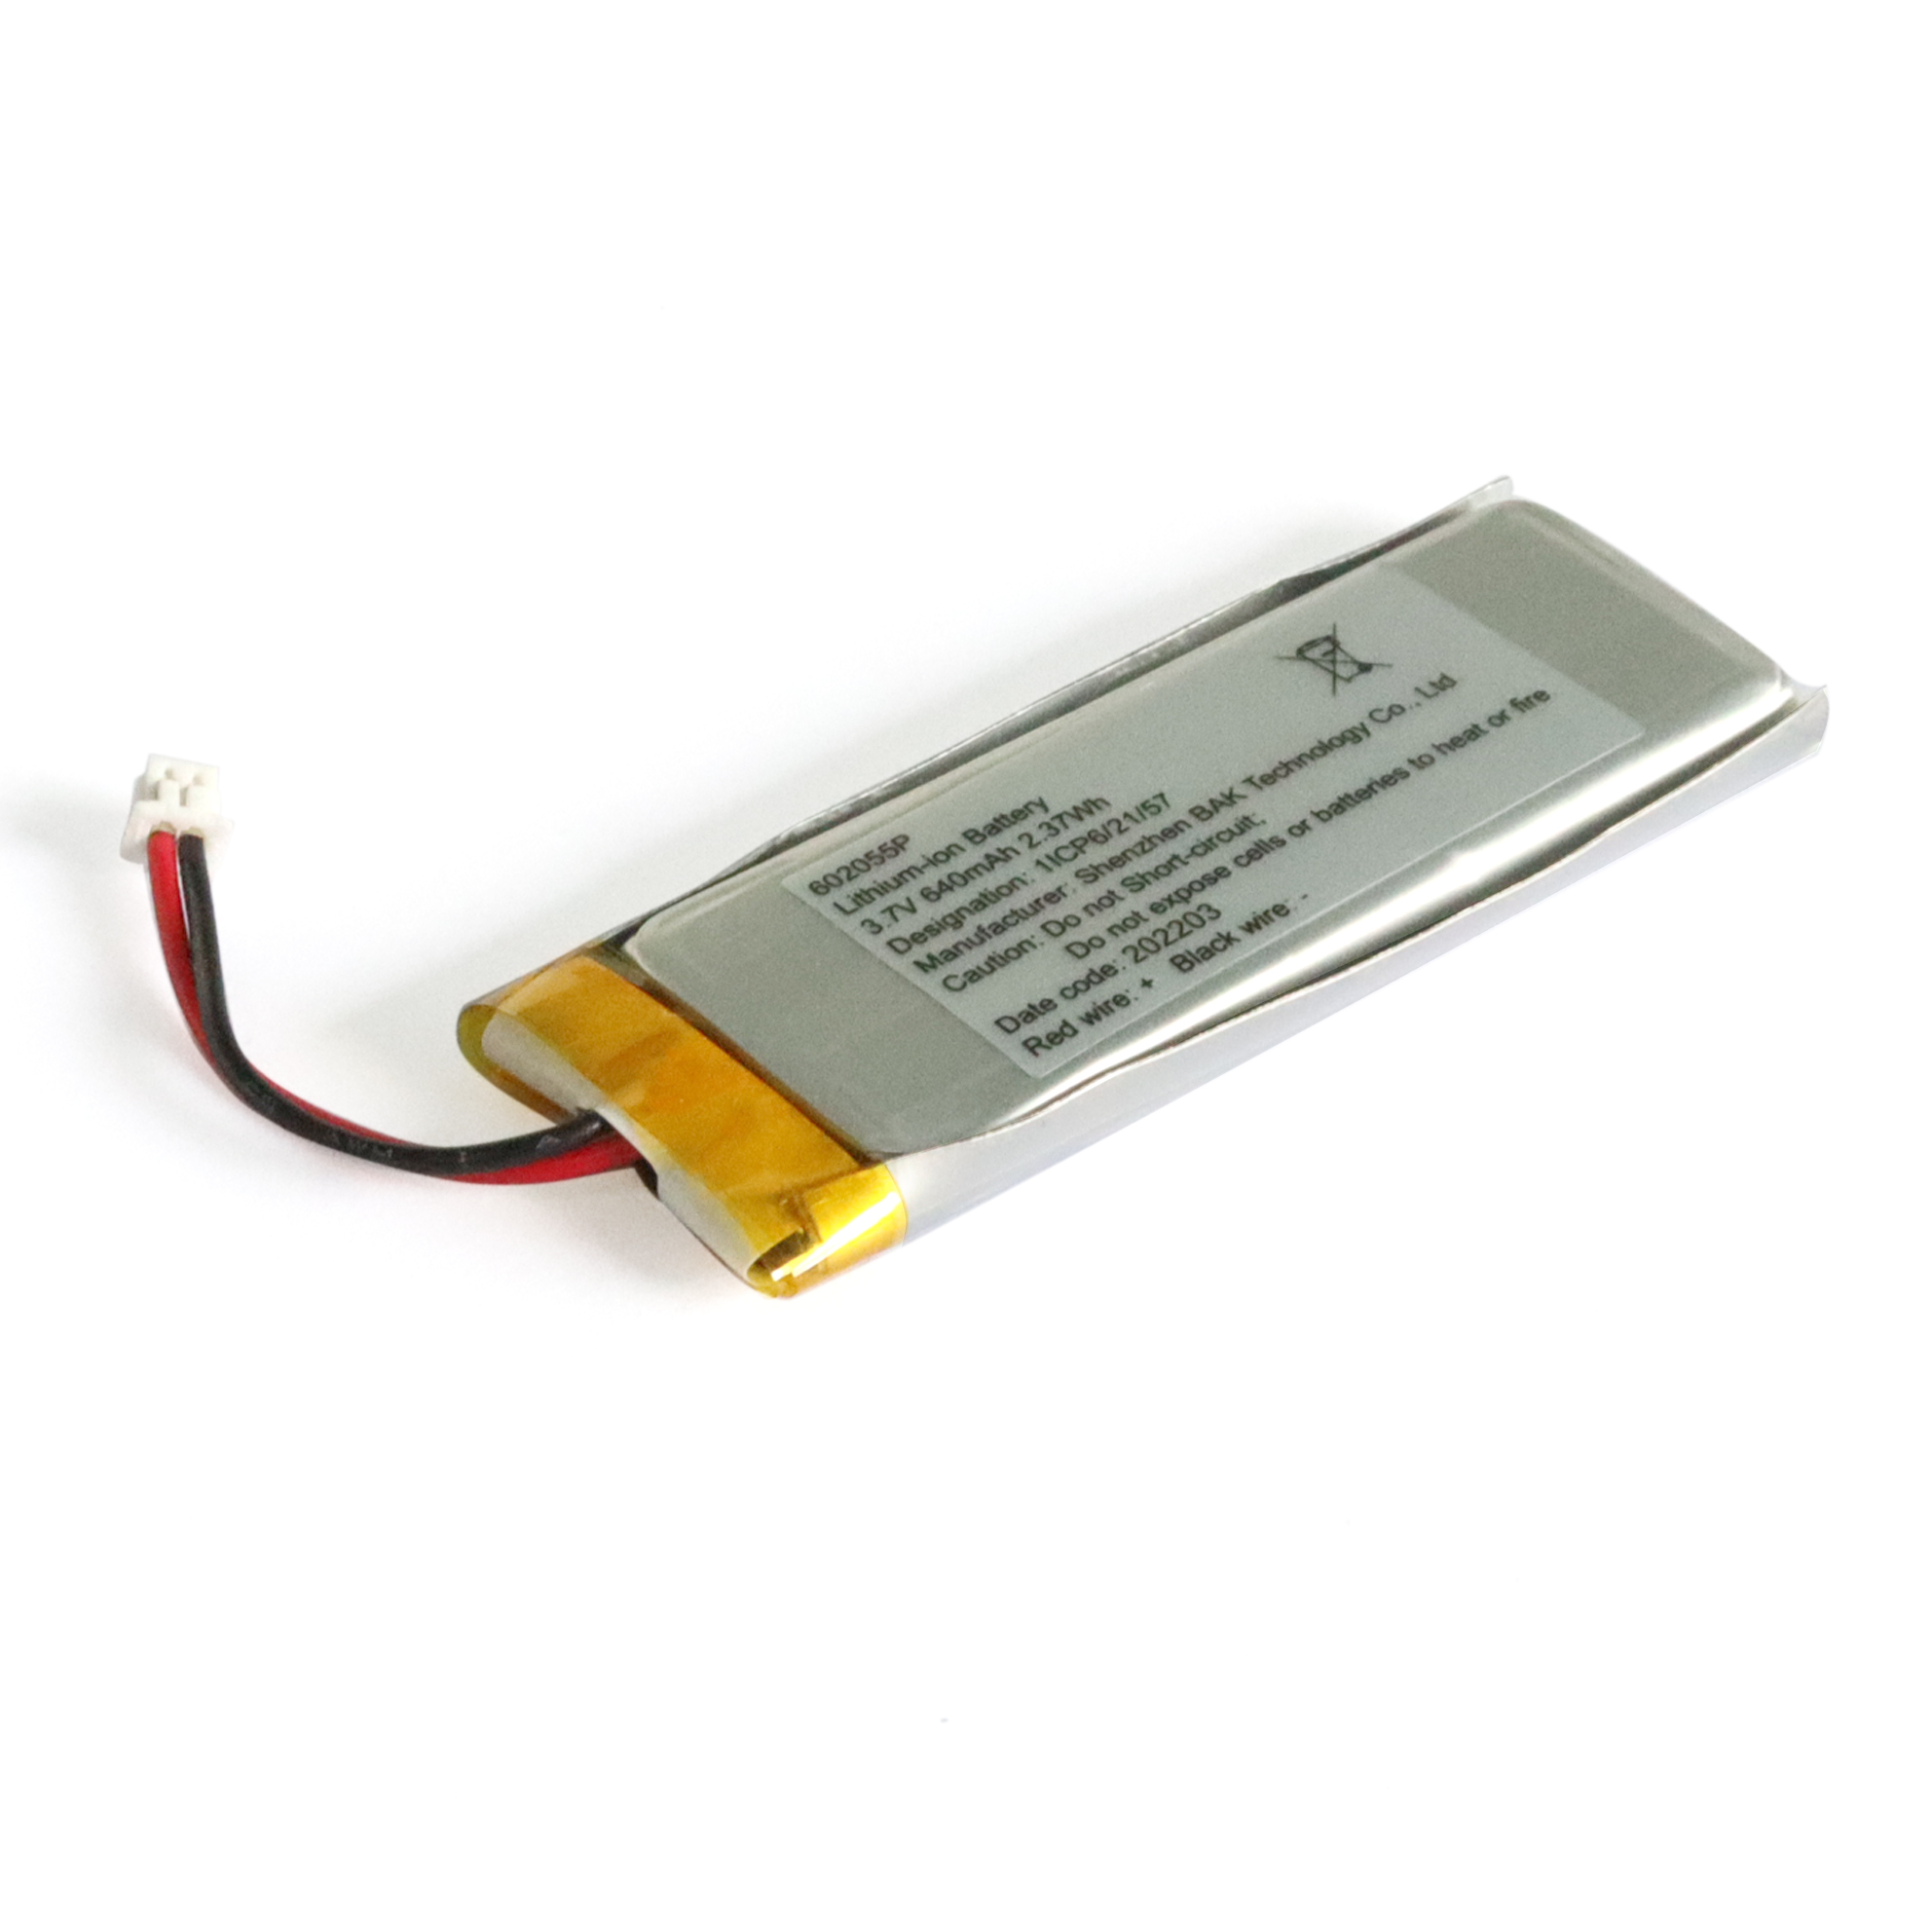 Lithiumpolymerbatterie 3,7 V 640mAh für Bluetooth -Geräte 